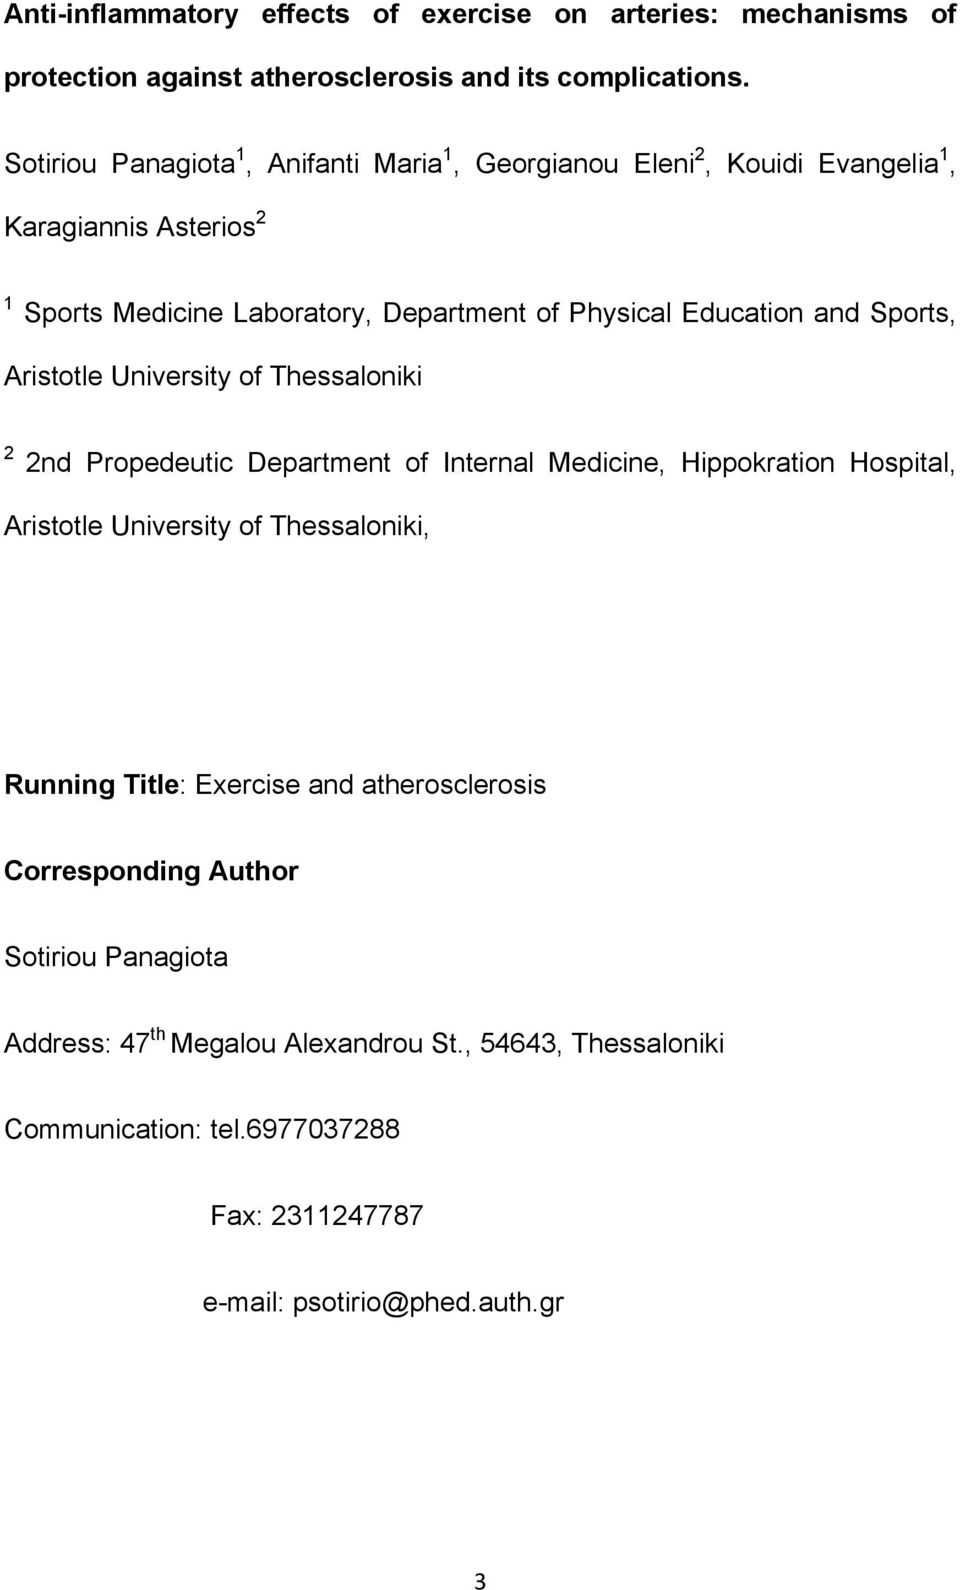 and Sports, Aristotle University of Thessaloniki 2 2nd Propedeutic Department of Internal Medicine, Hippokration Hospital, Aristotle University of Thessaloniki,